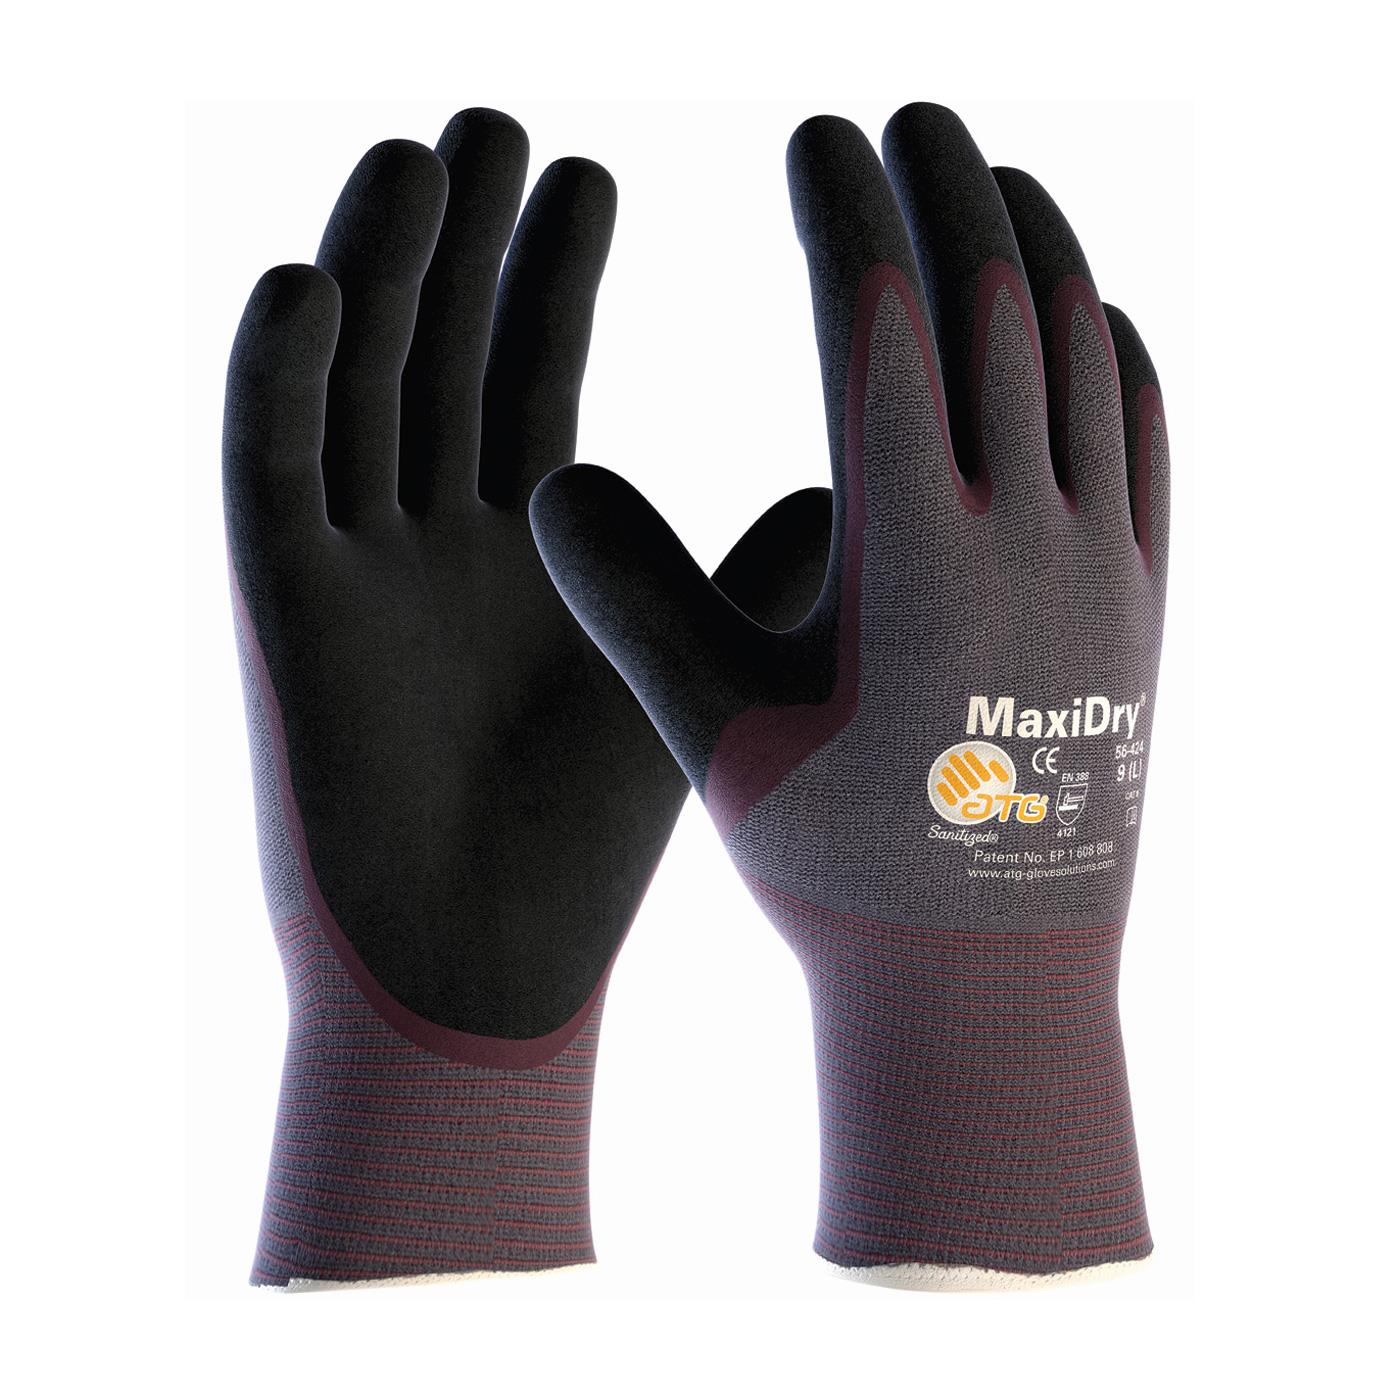 MAXIDRY GRIPTECH NITRILE PALM COAT - General Purpose Gloves